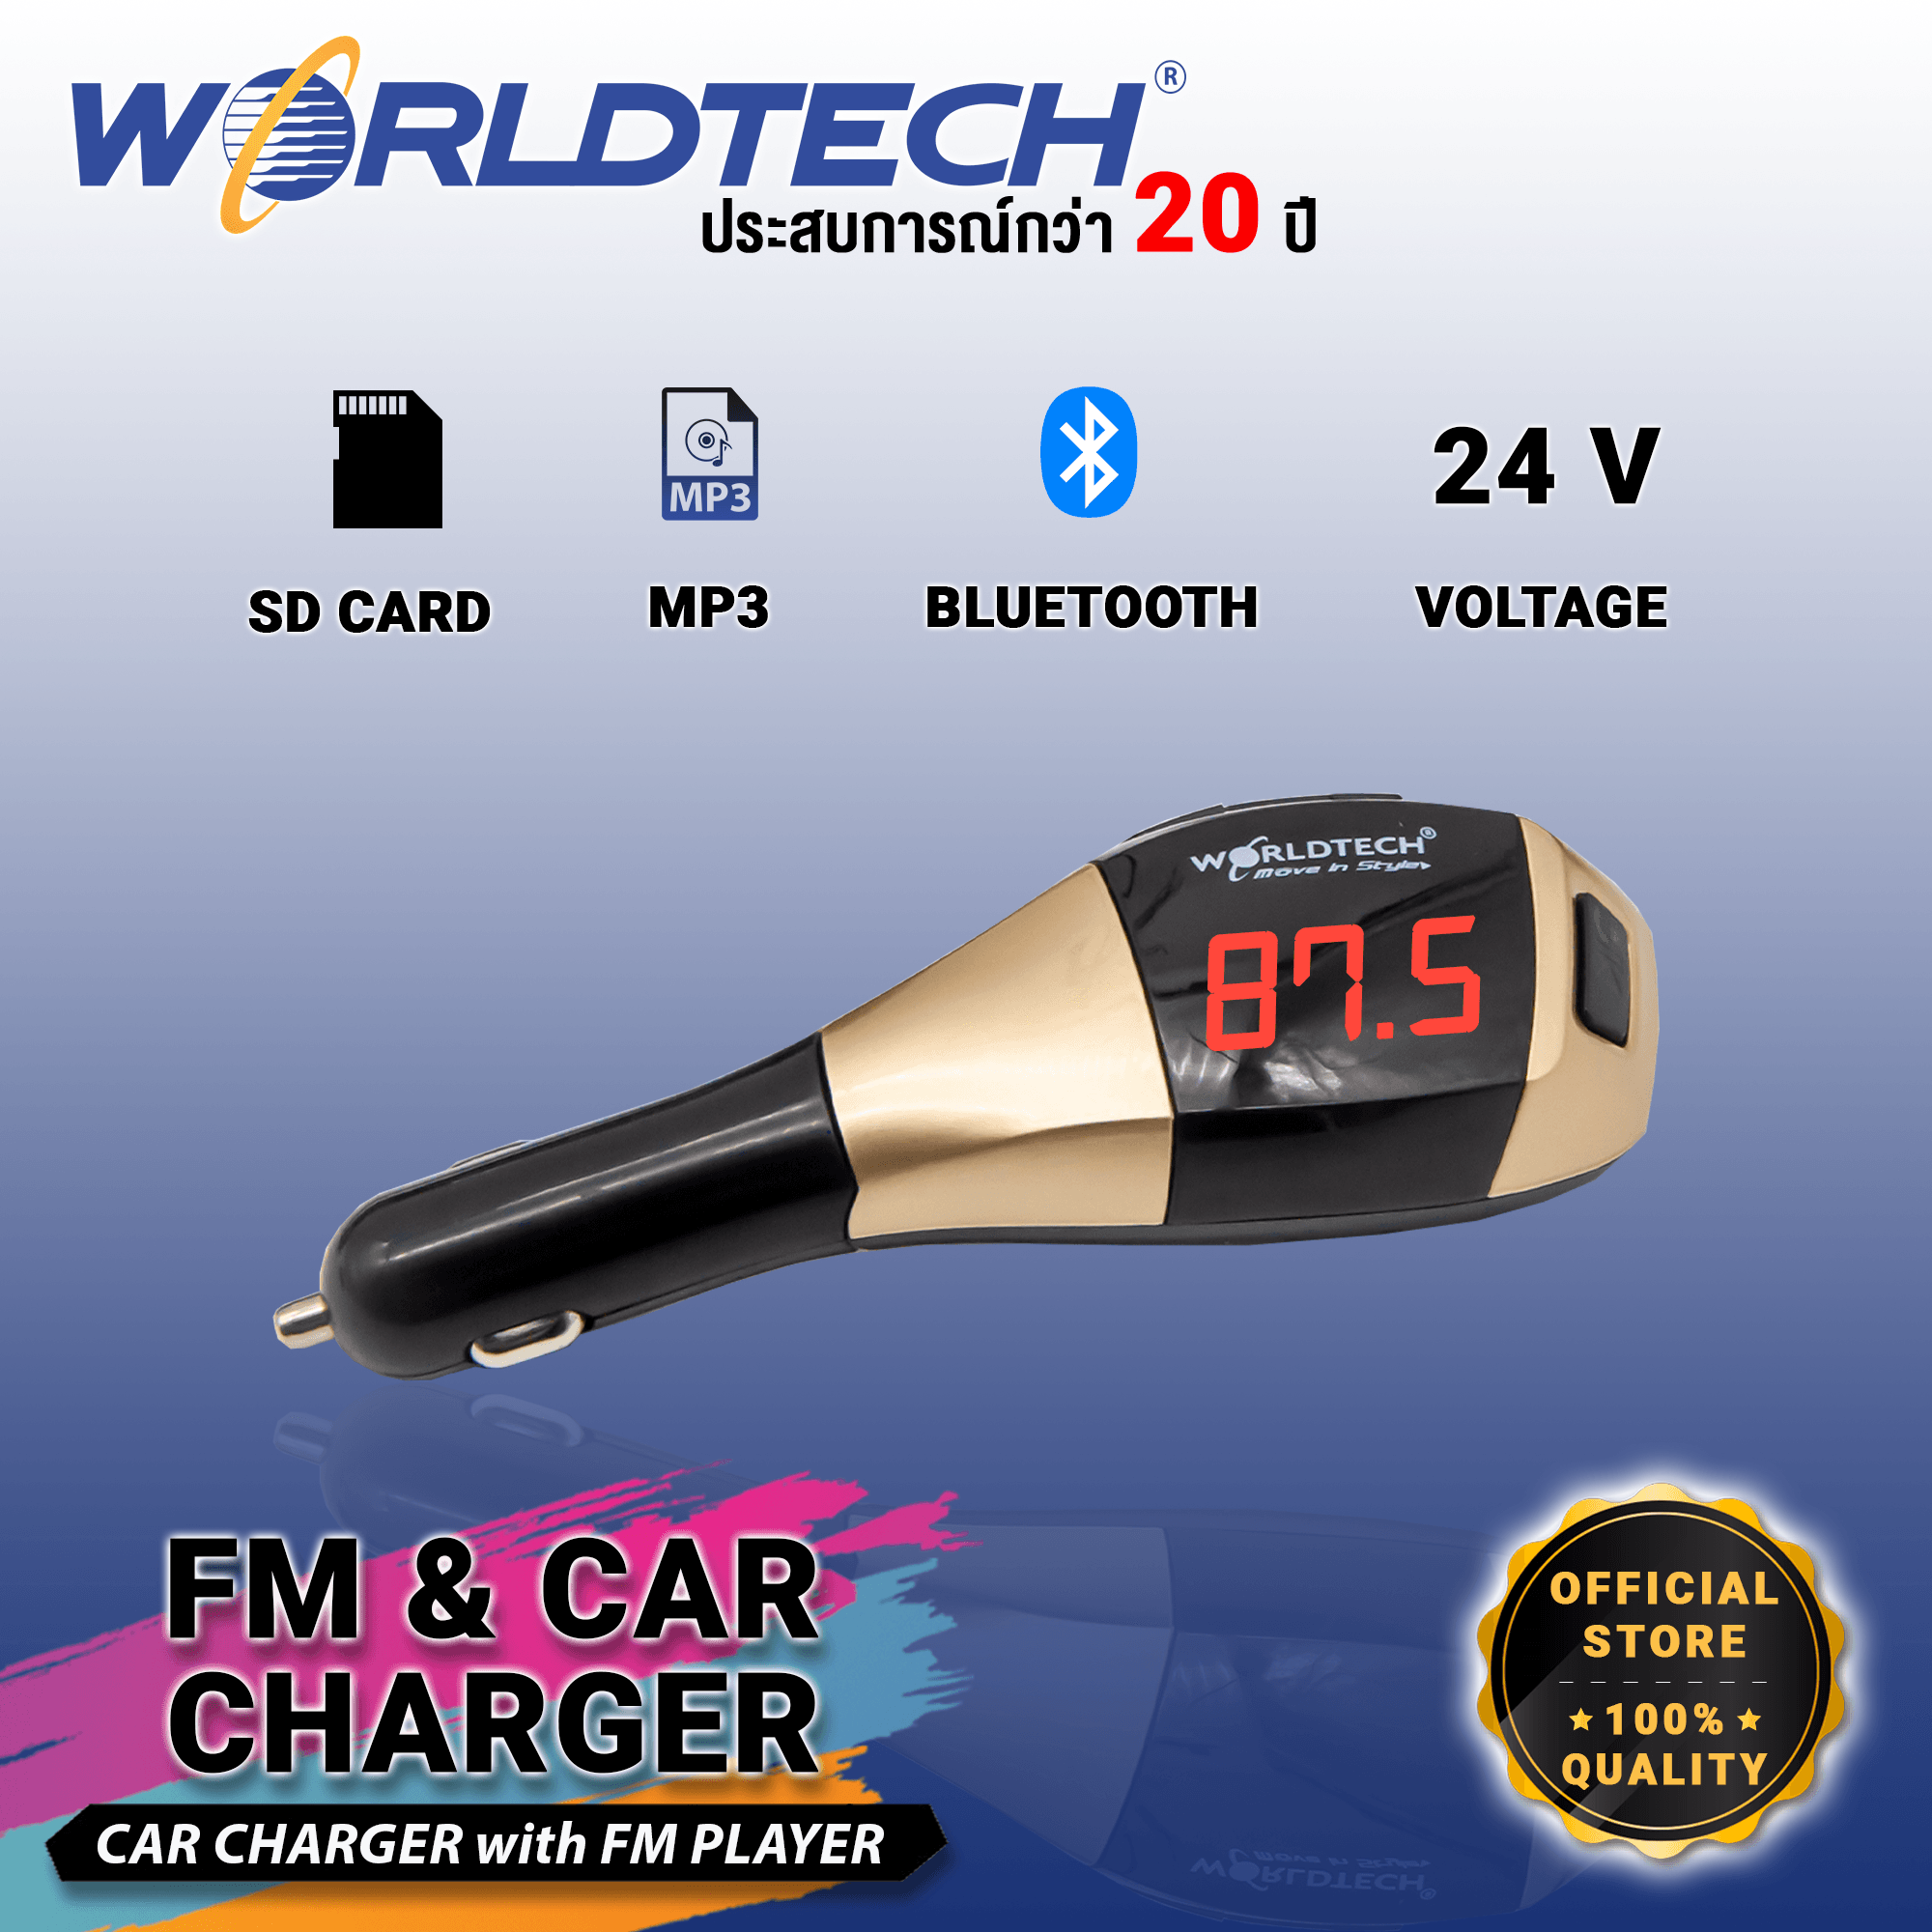 Worldtech Bluetooth Car Kit X5 FM Transmitter รุ่น WT-87FM-19 บลูทูธในรถยนต์